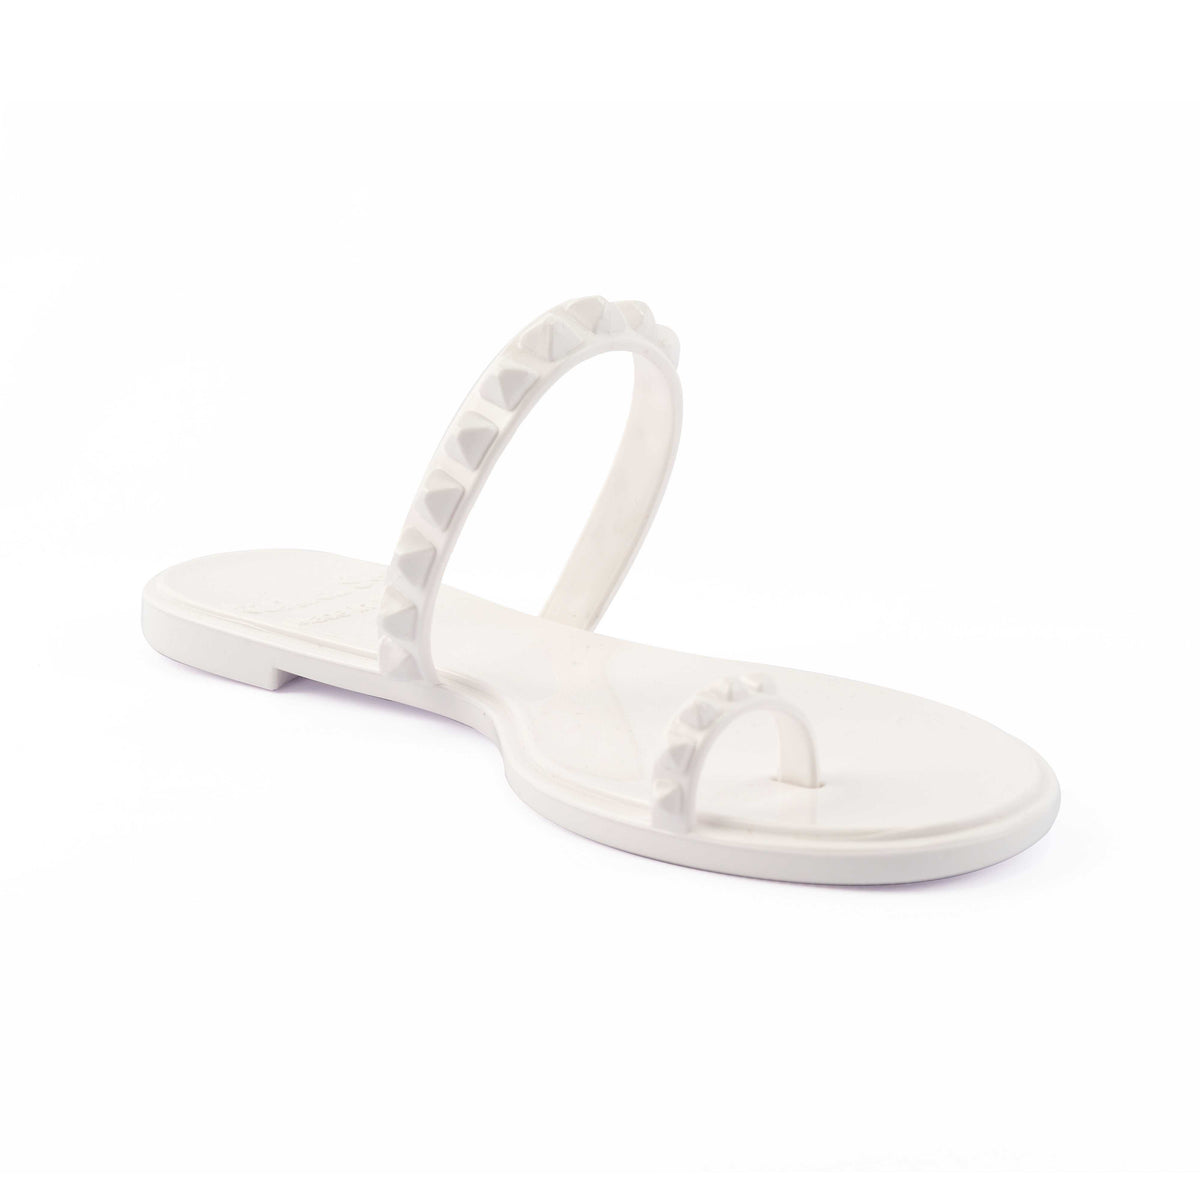 Maria Carmen Sol white sandals, summer sandals for women from carmen sol